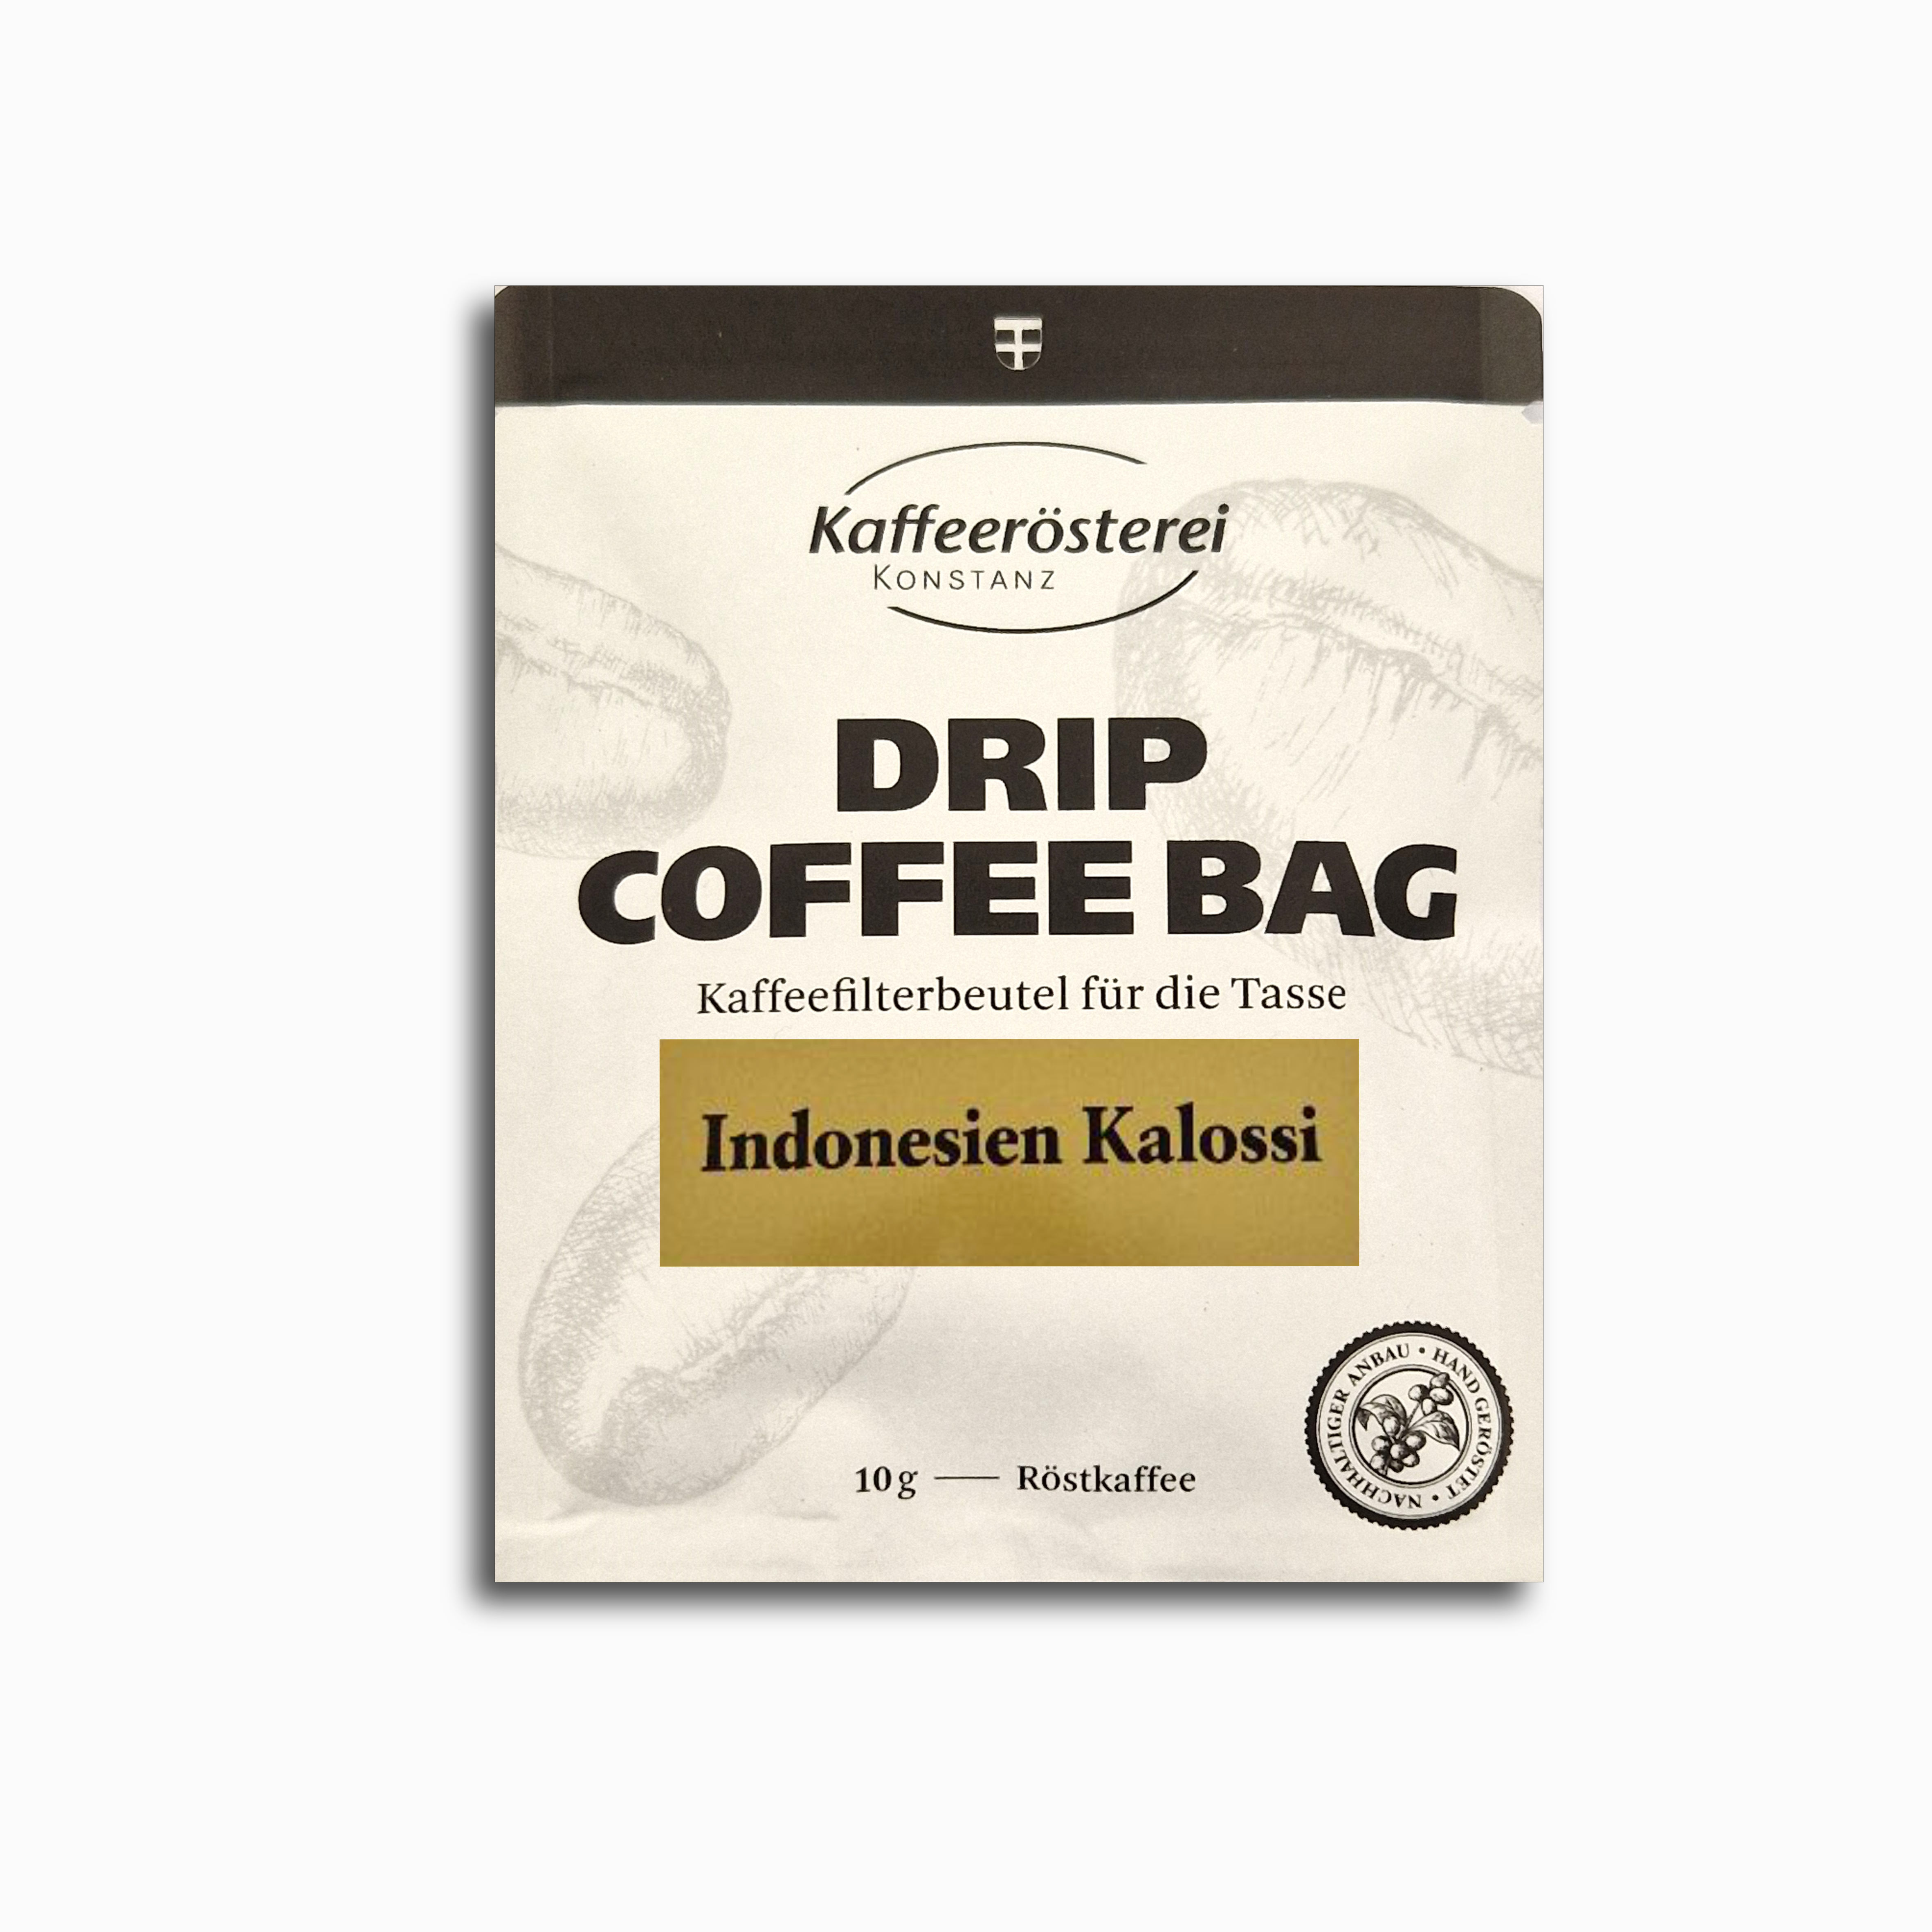 Drip Coffee Bag - Indonesien Sulawesi Kalossi 